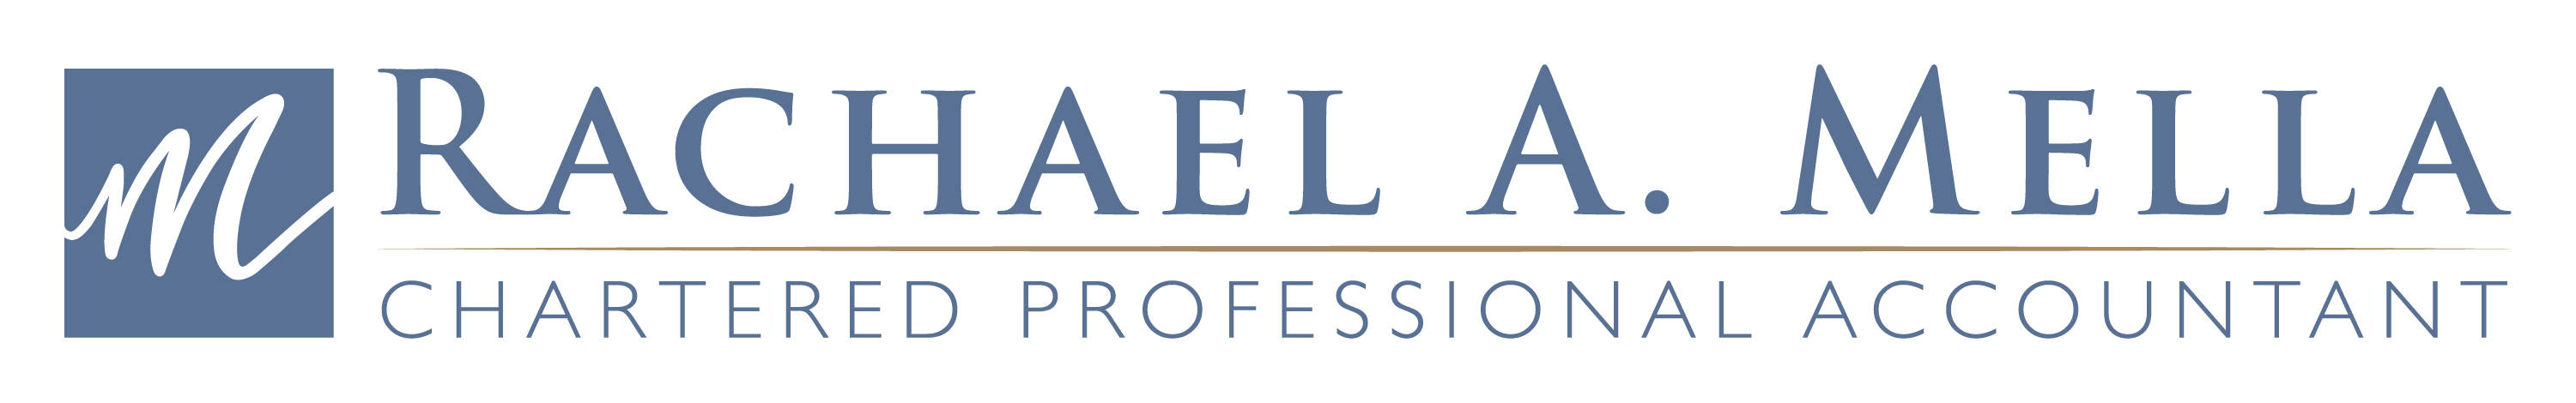 Rachael A. Mella, Chartered Professional Accountant